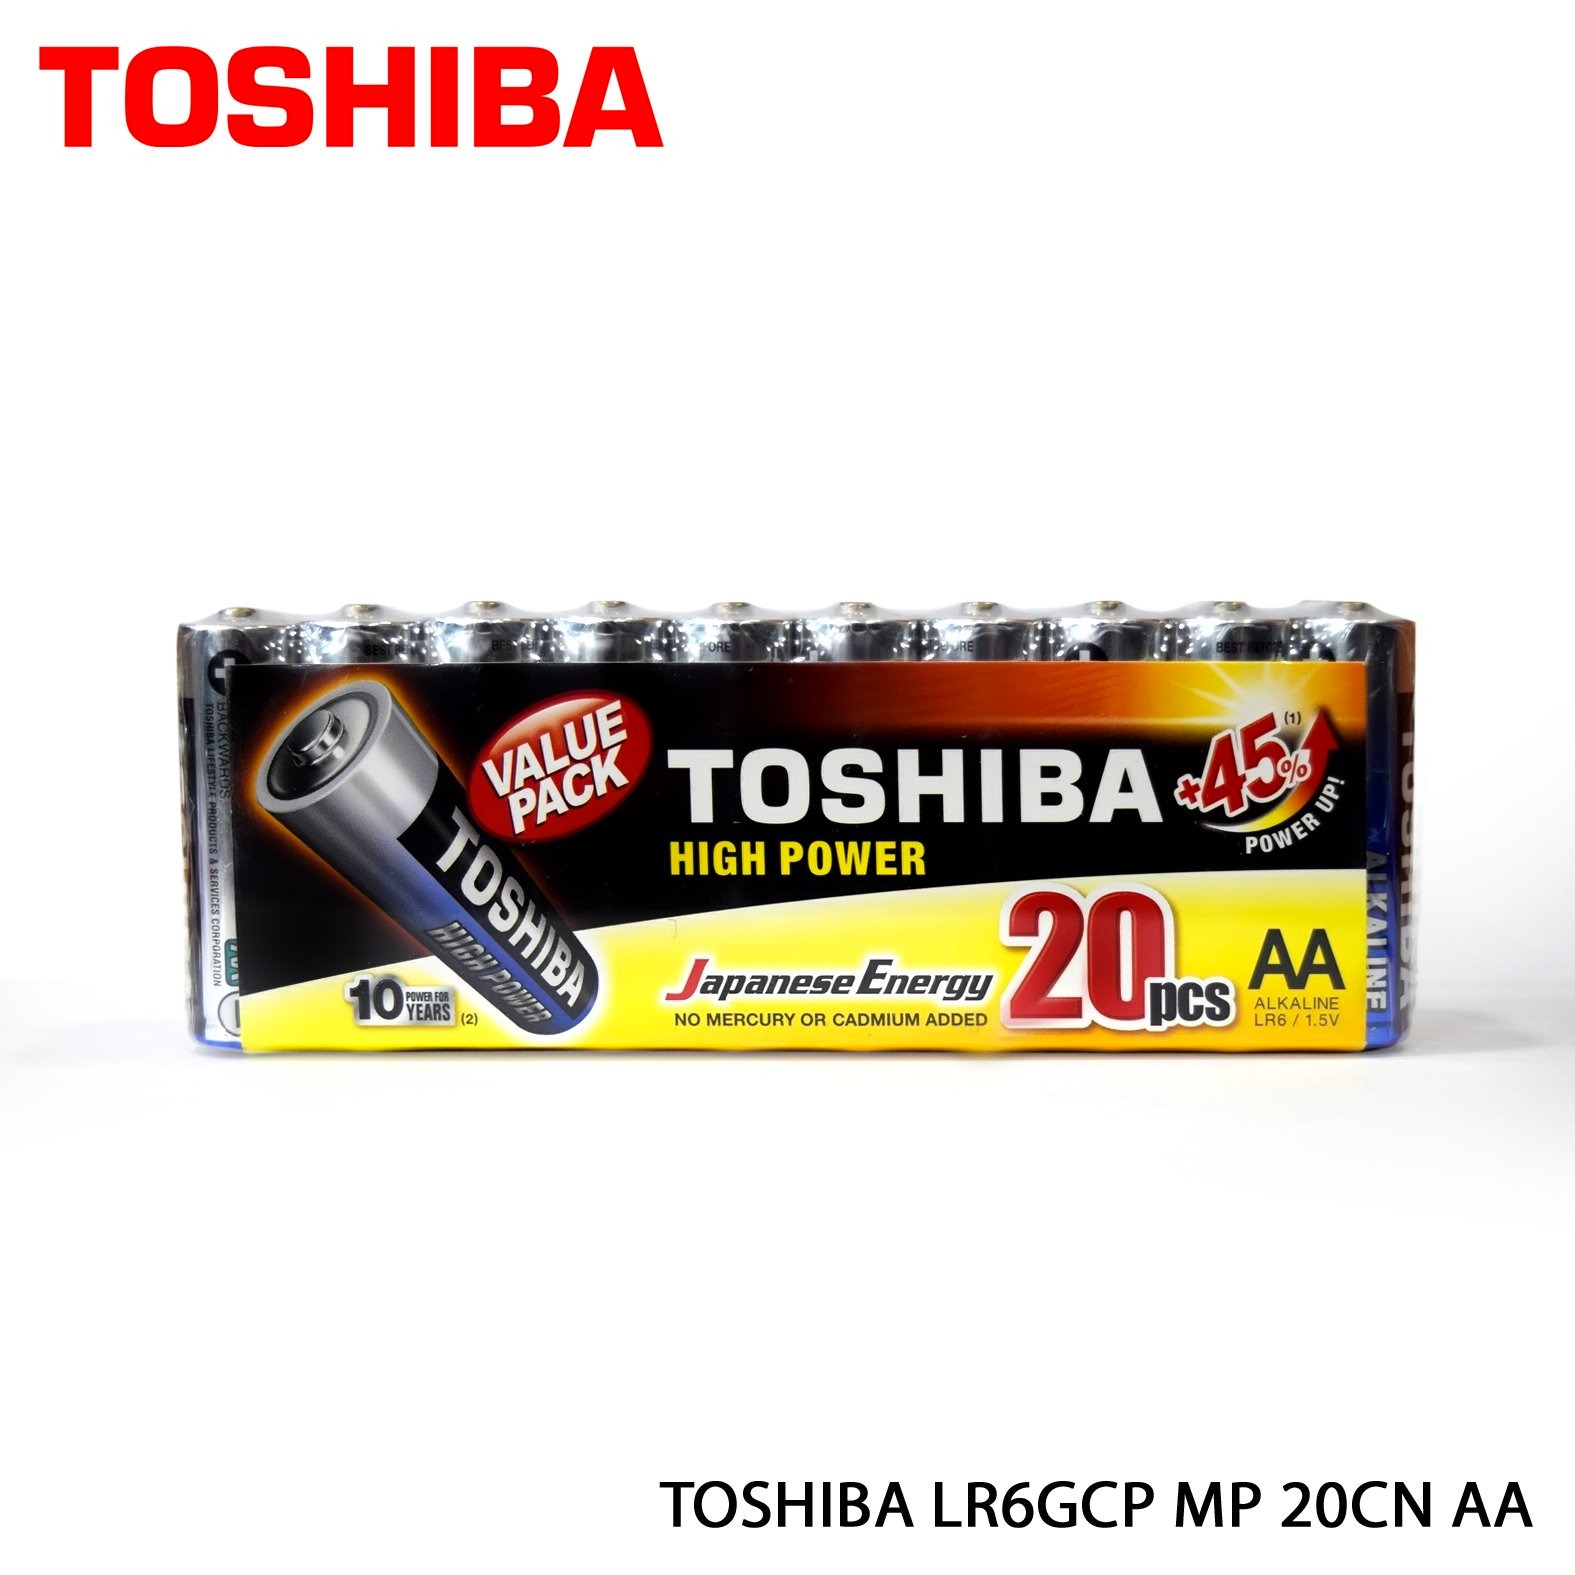 TOSHIBA LR6GCP MP 20CN AA